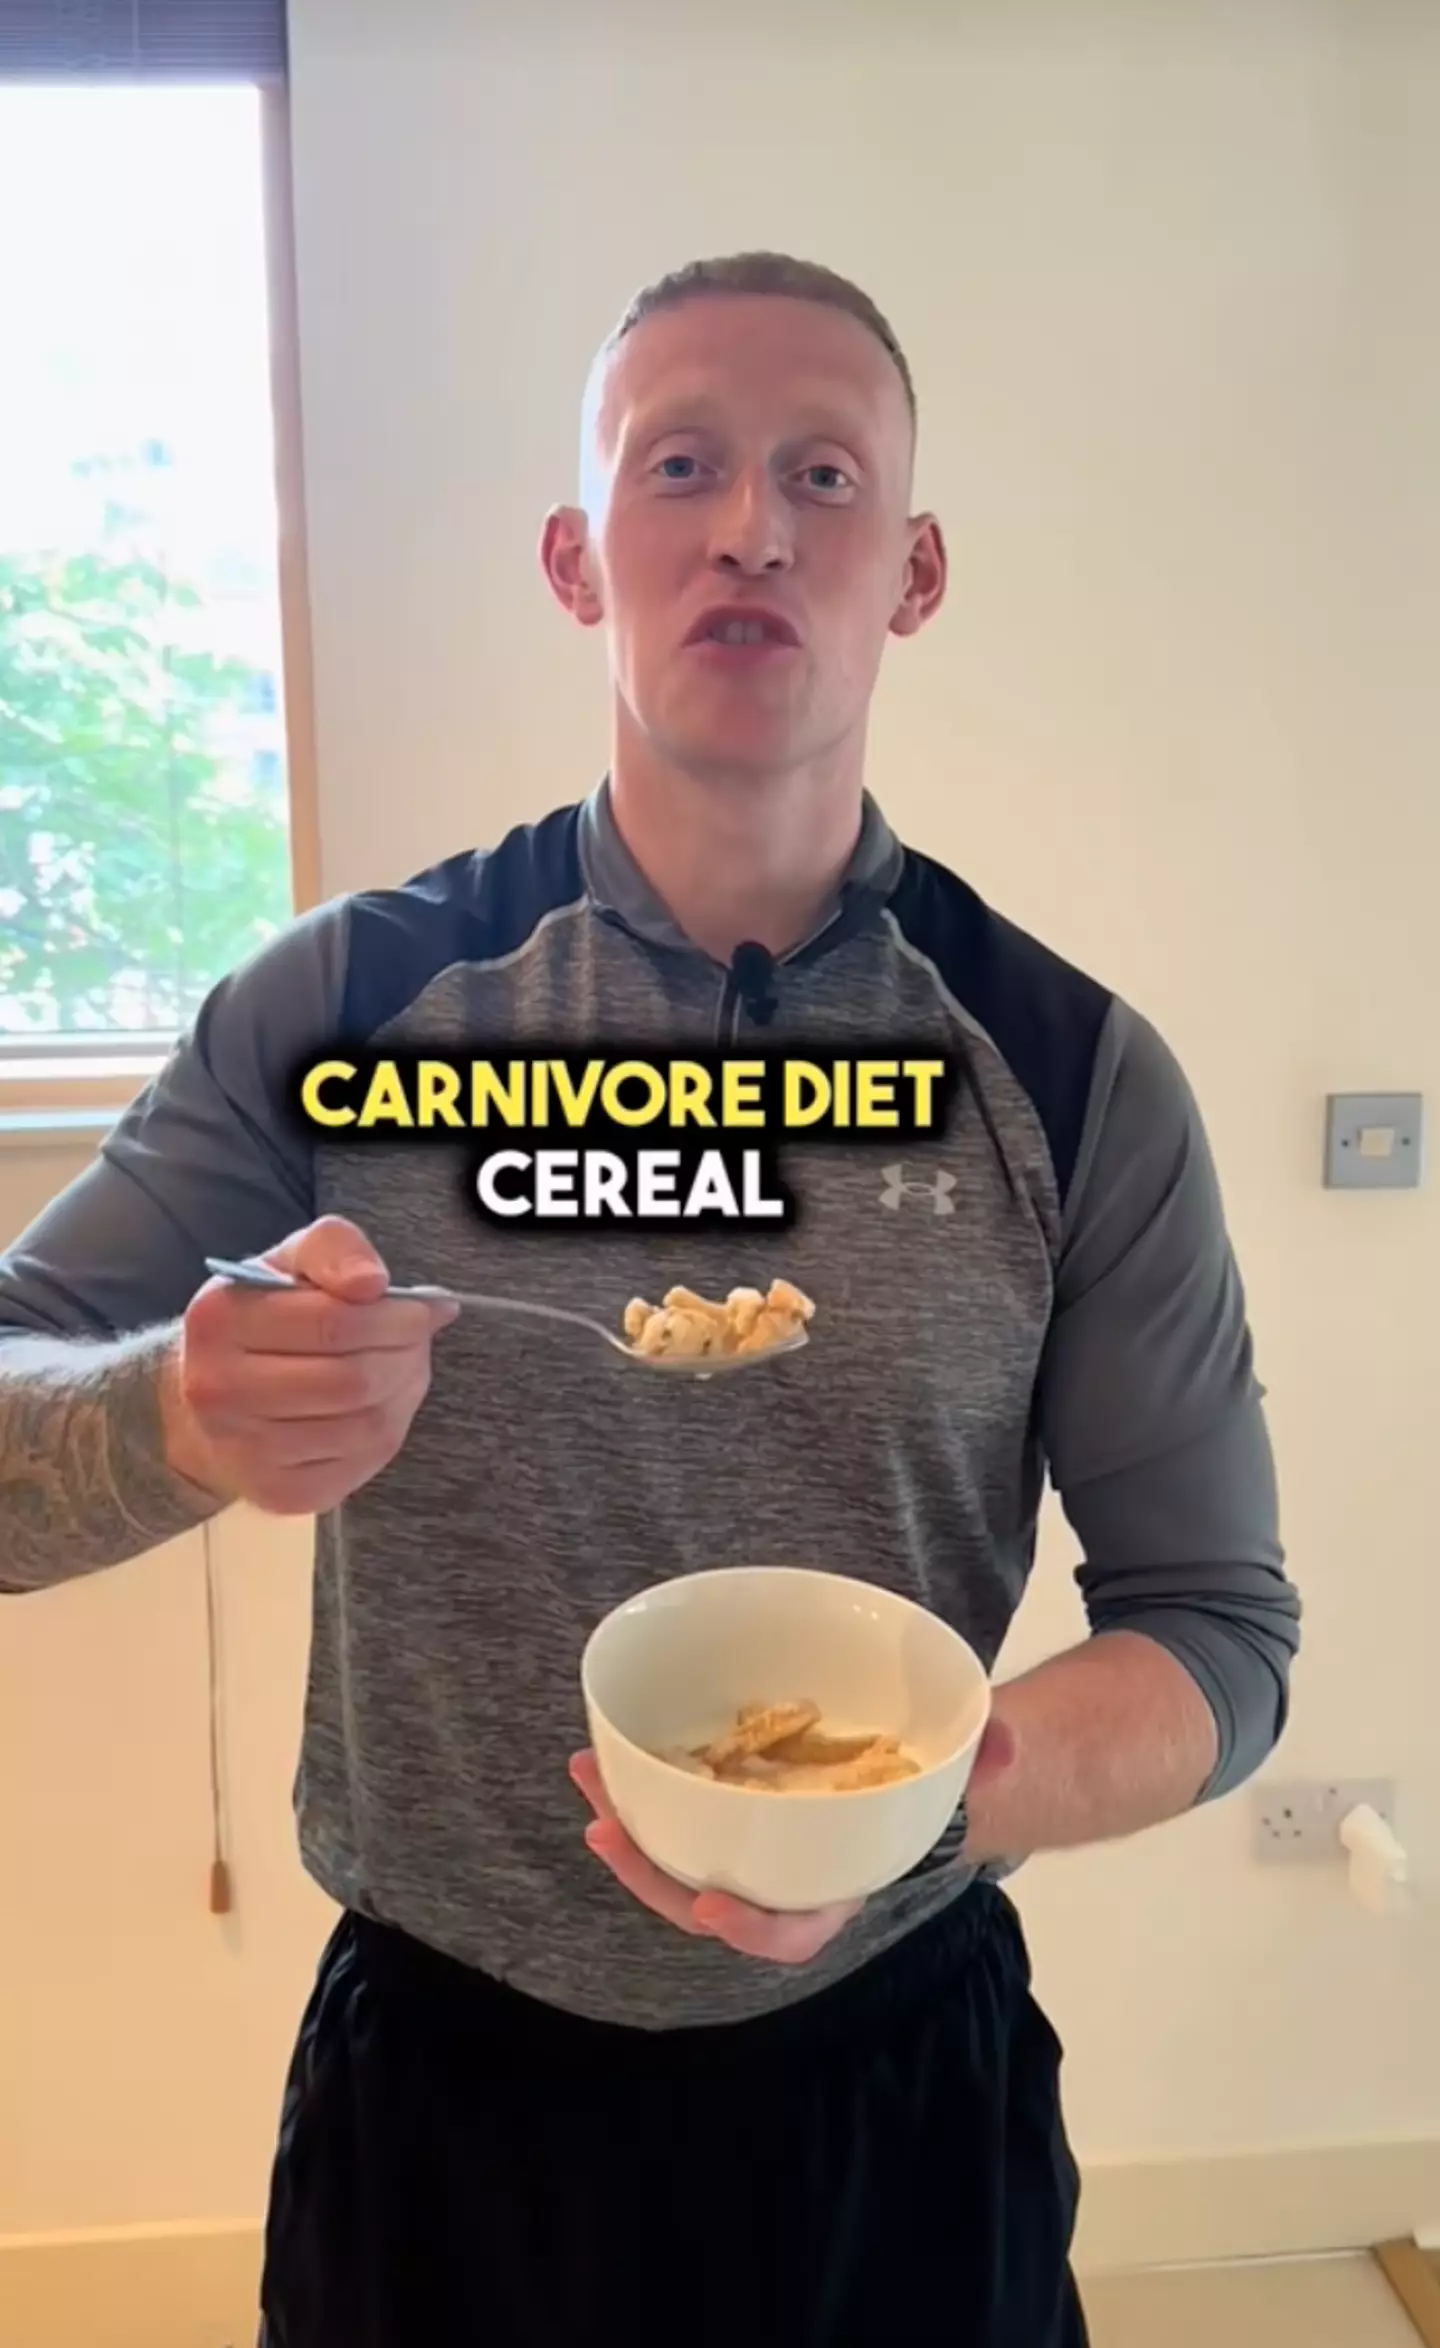 Cam showed off his ‘carnivore diet cereal’ on TikTok.